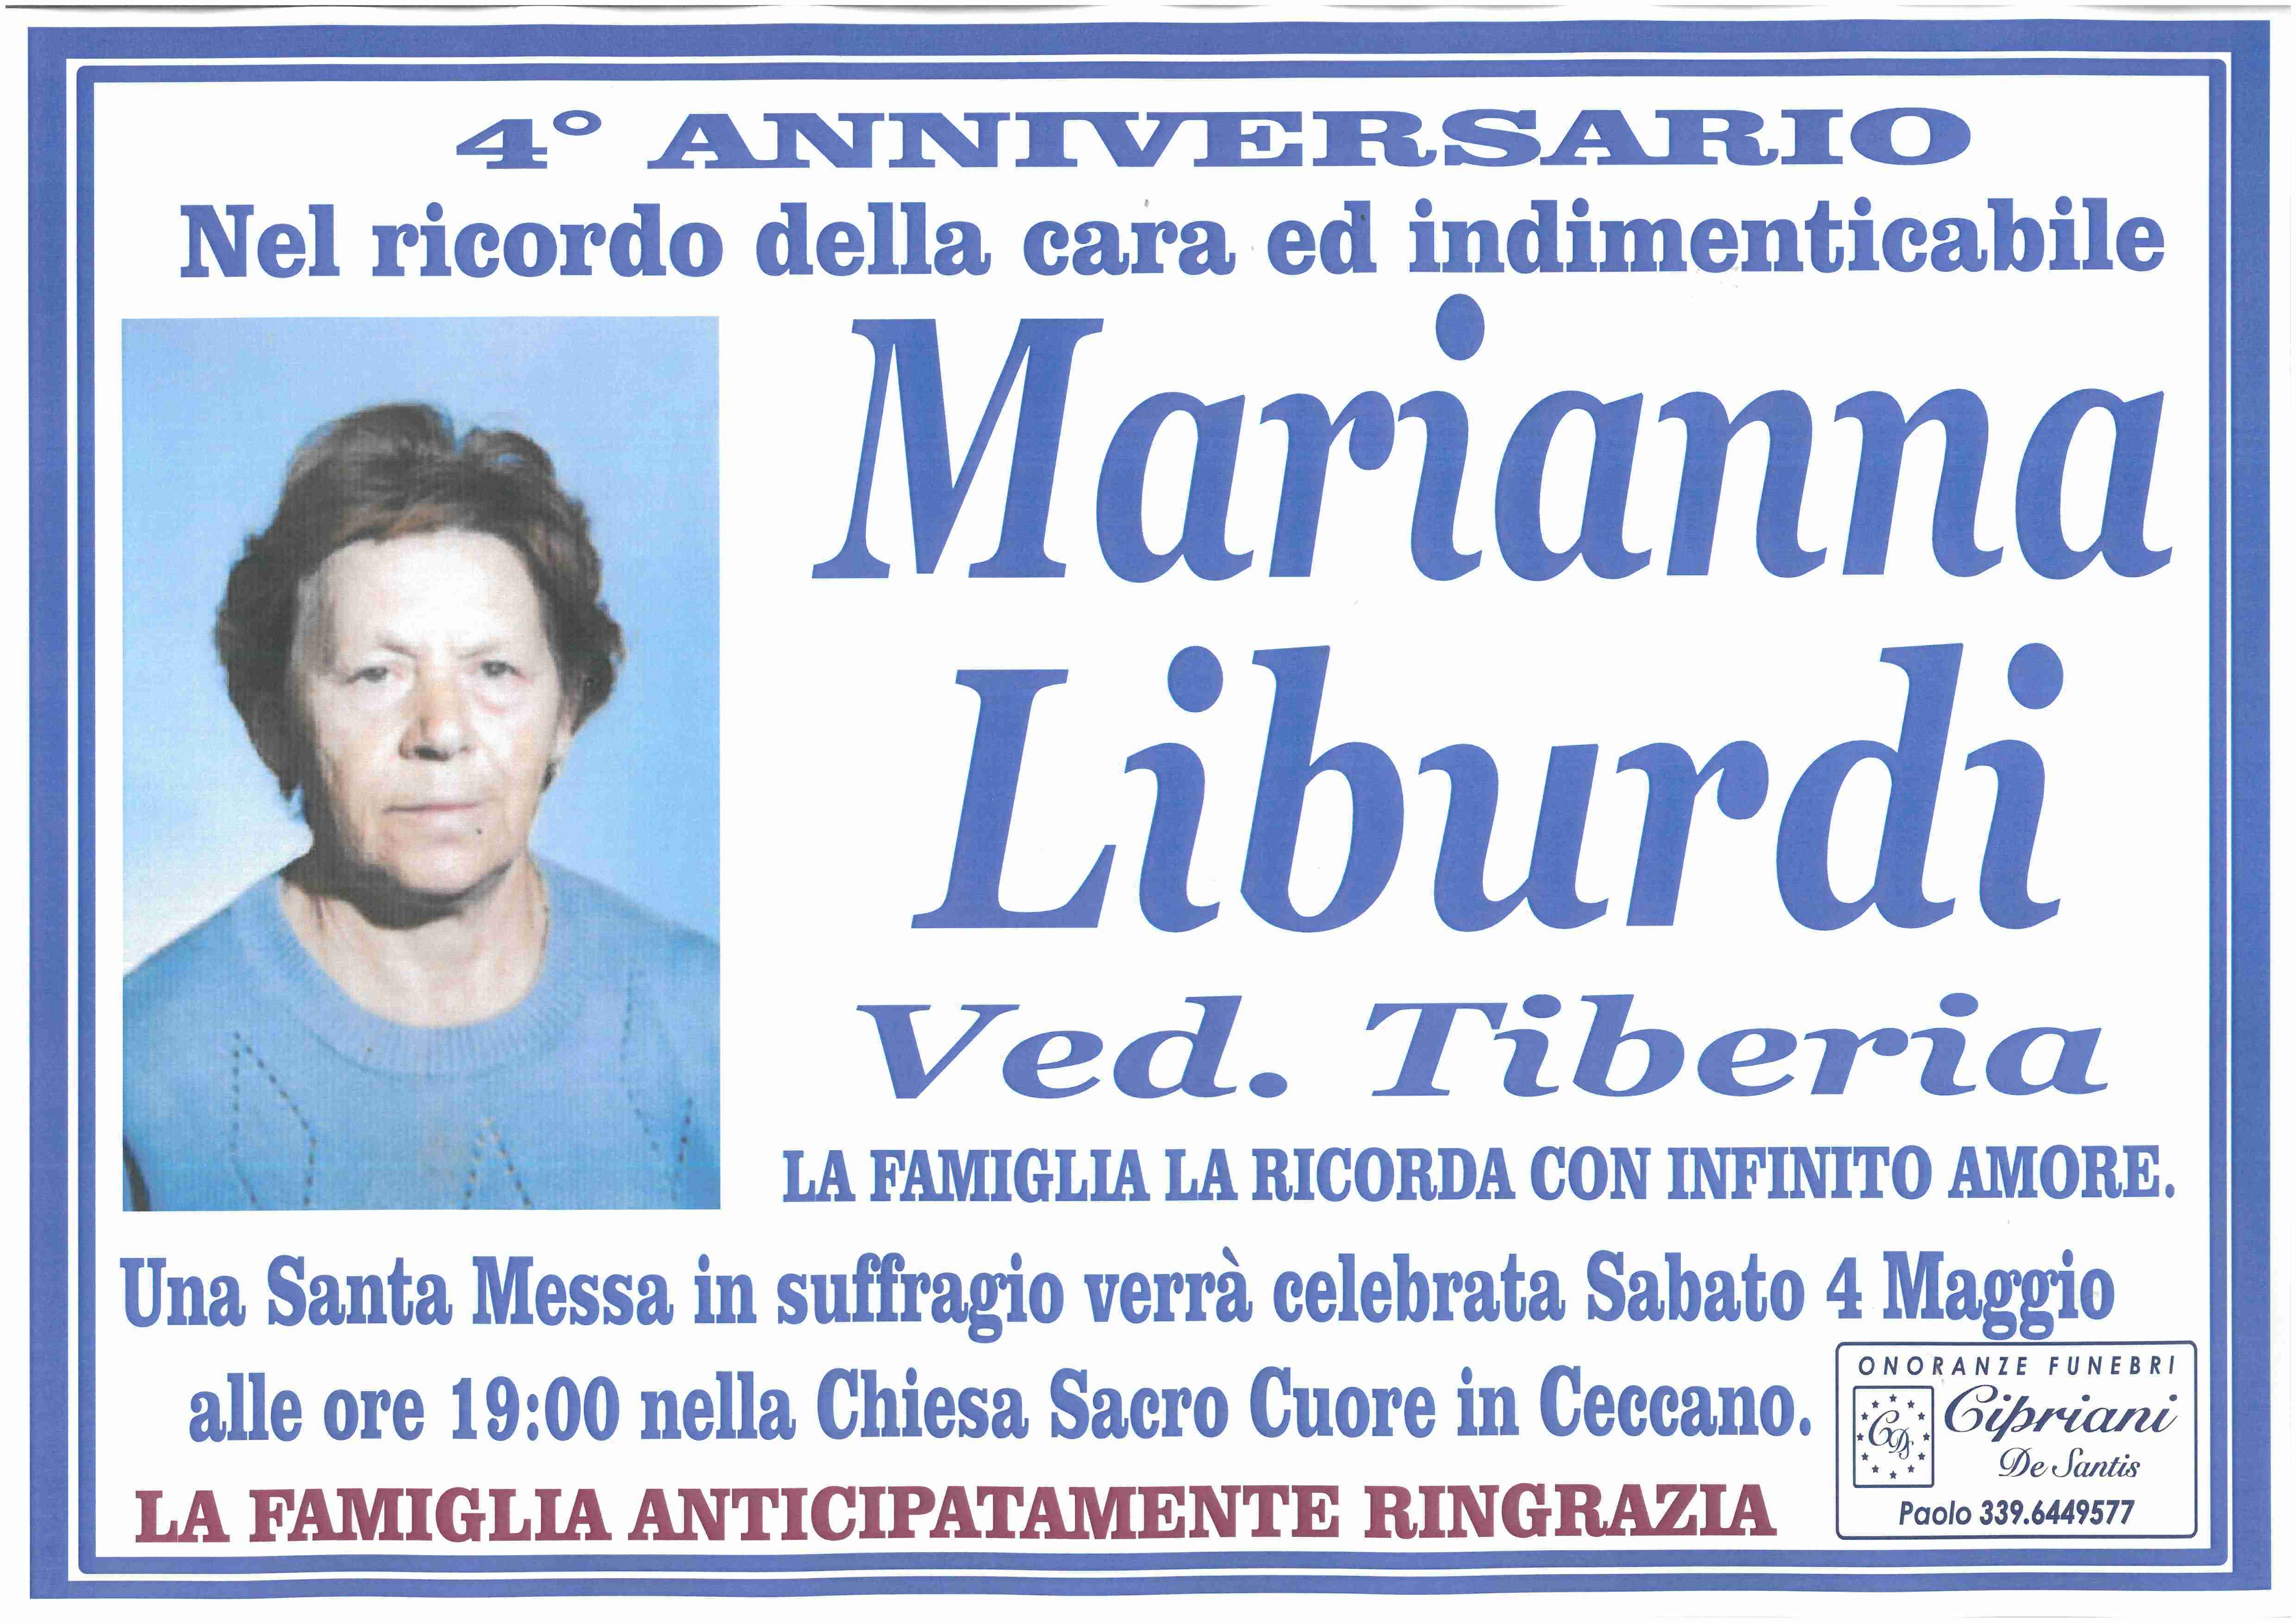 Marianna Liburdi